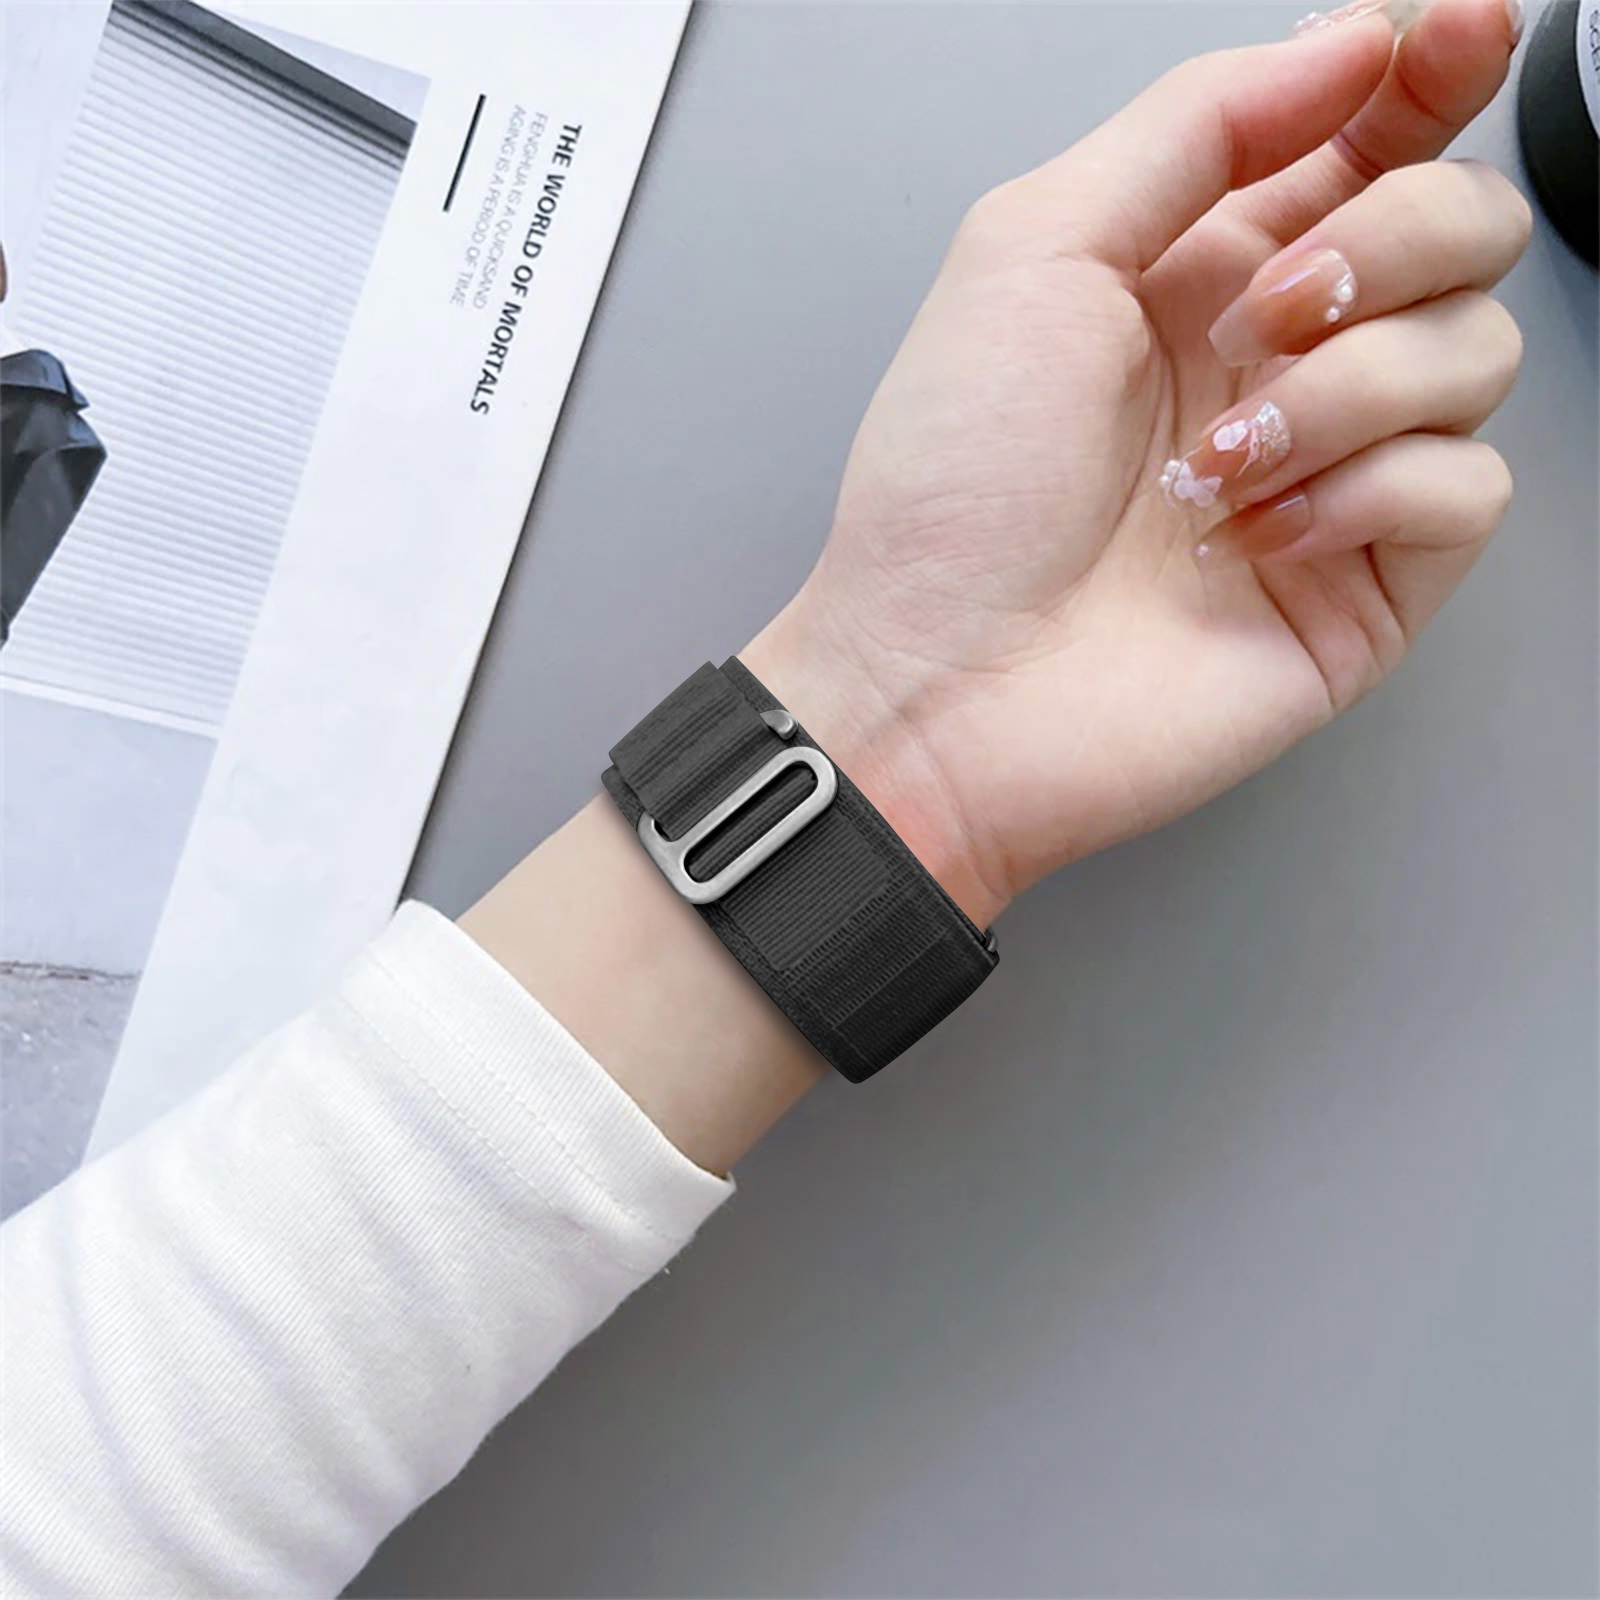 Bracelet acier inoxydable Samsung Galaxy Watch 5 Pro - 45mm (noir